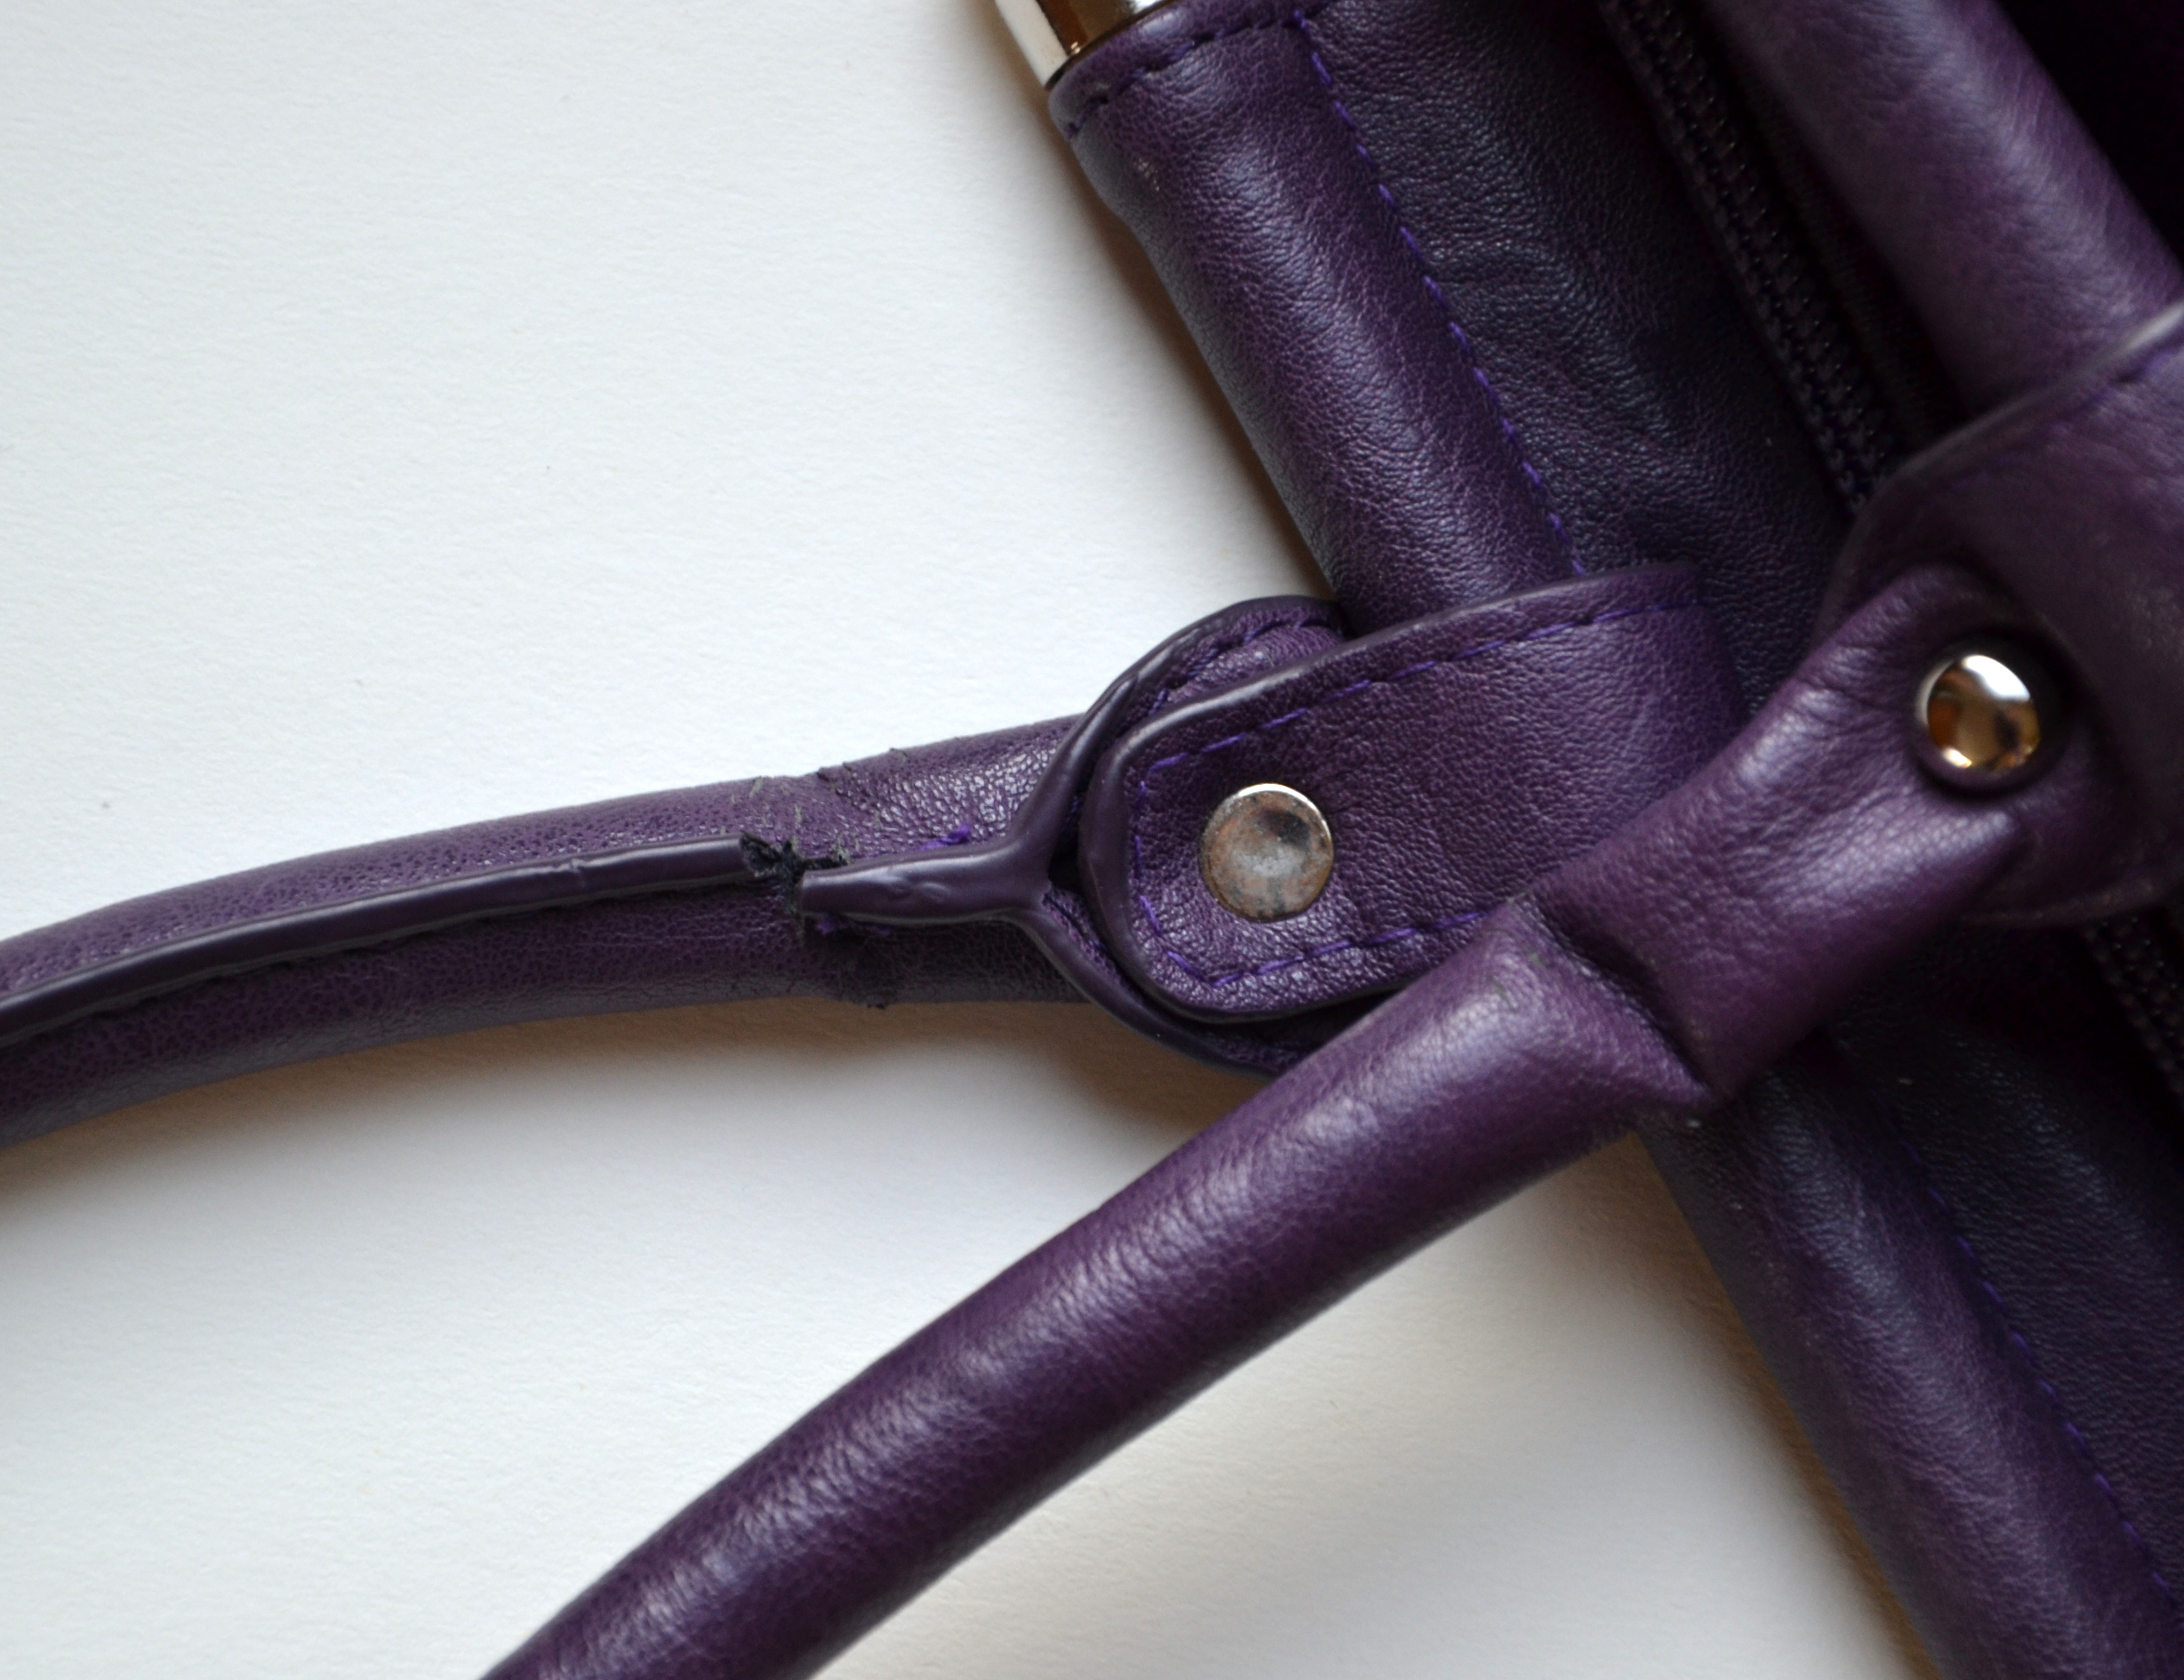 Repairing a Broken Leather Purse Strap?